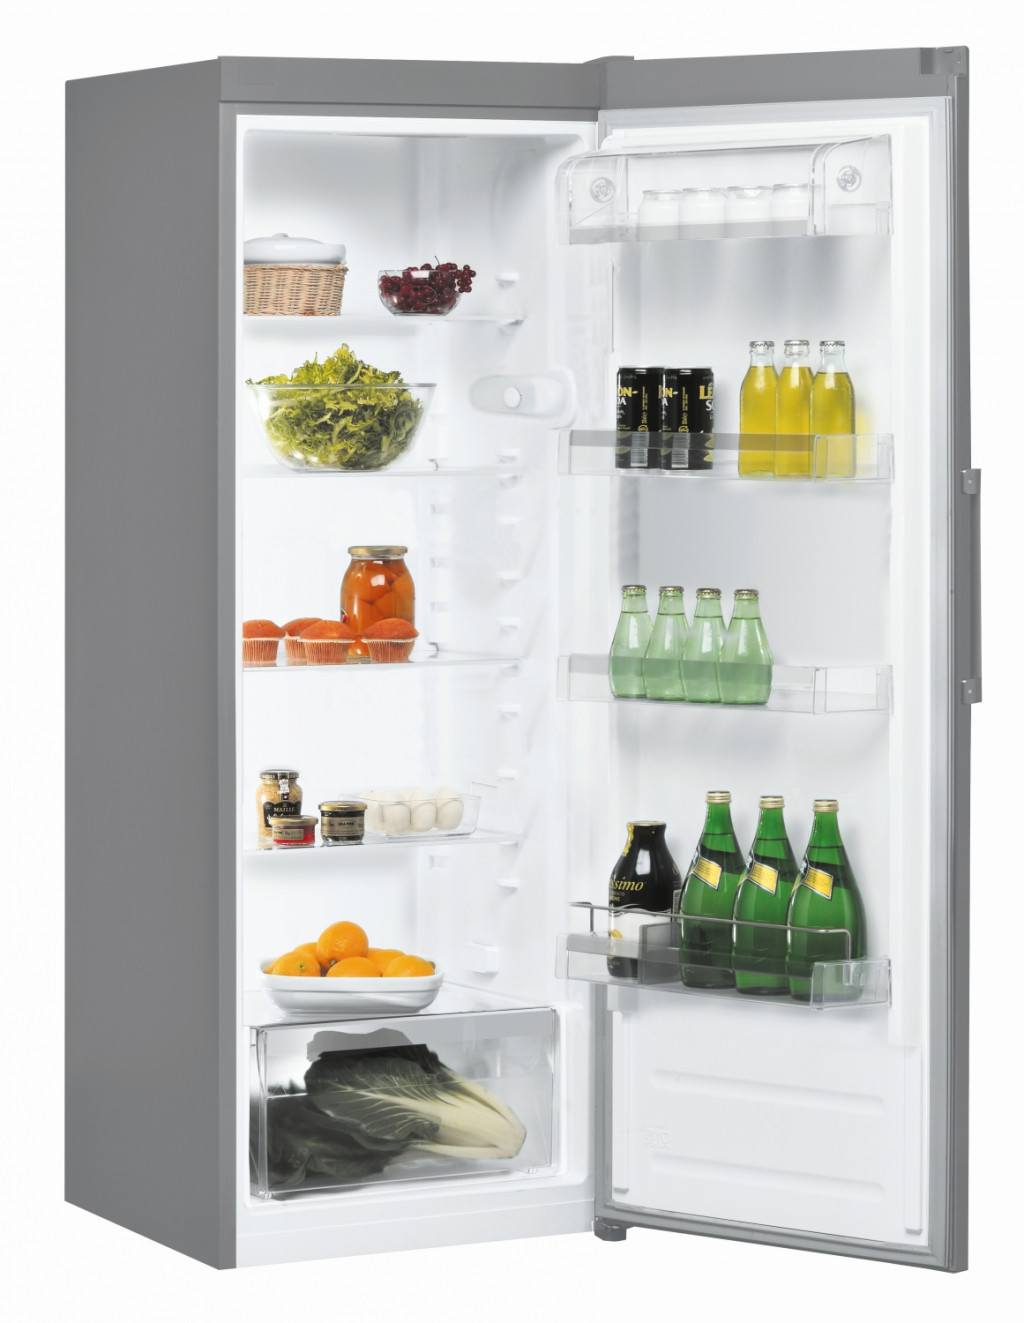 INDESIT Refrigerator SI6 1 S Energy efficiency class F, Free standing, Larder, Height 167 cm, Fridge net capacity 323 L, 40 dB, Silver